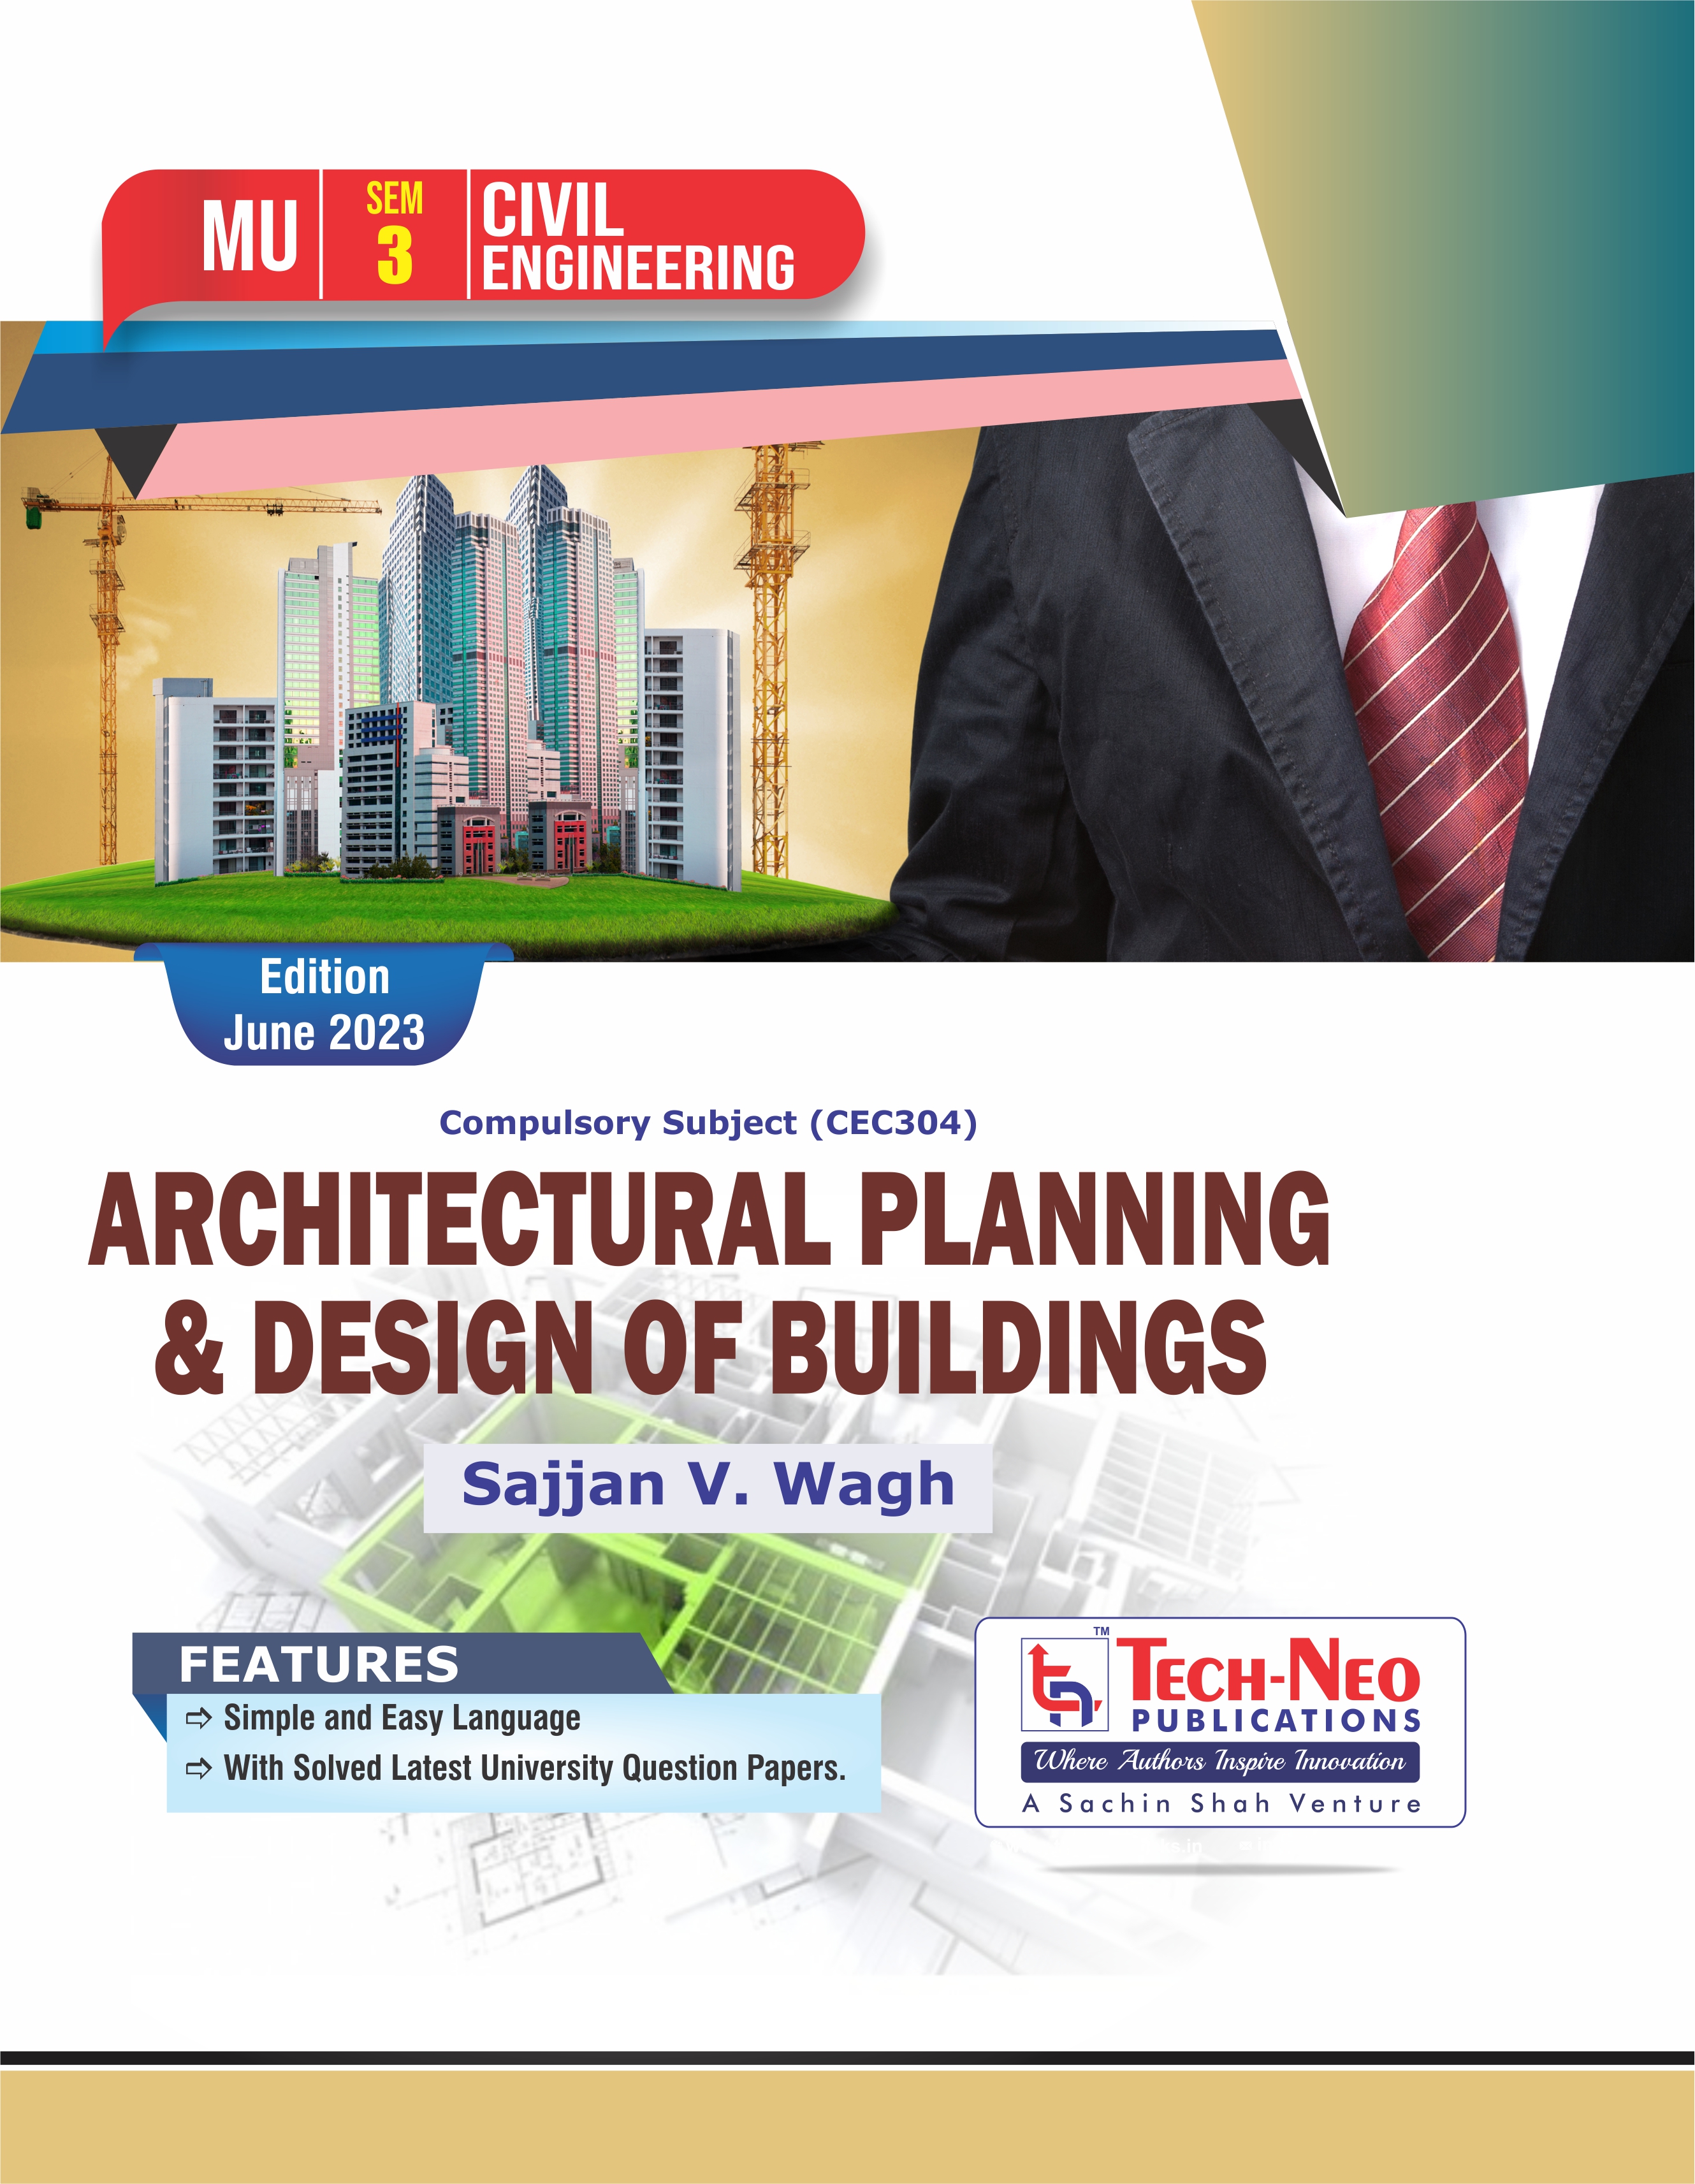 Architectural Planning & Design of Buildings (CEC304)